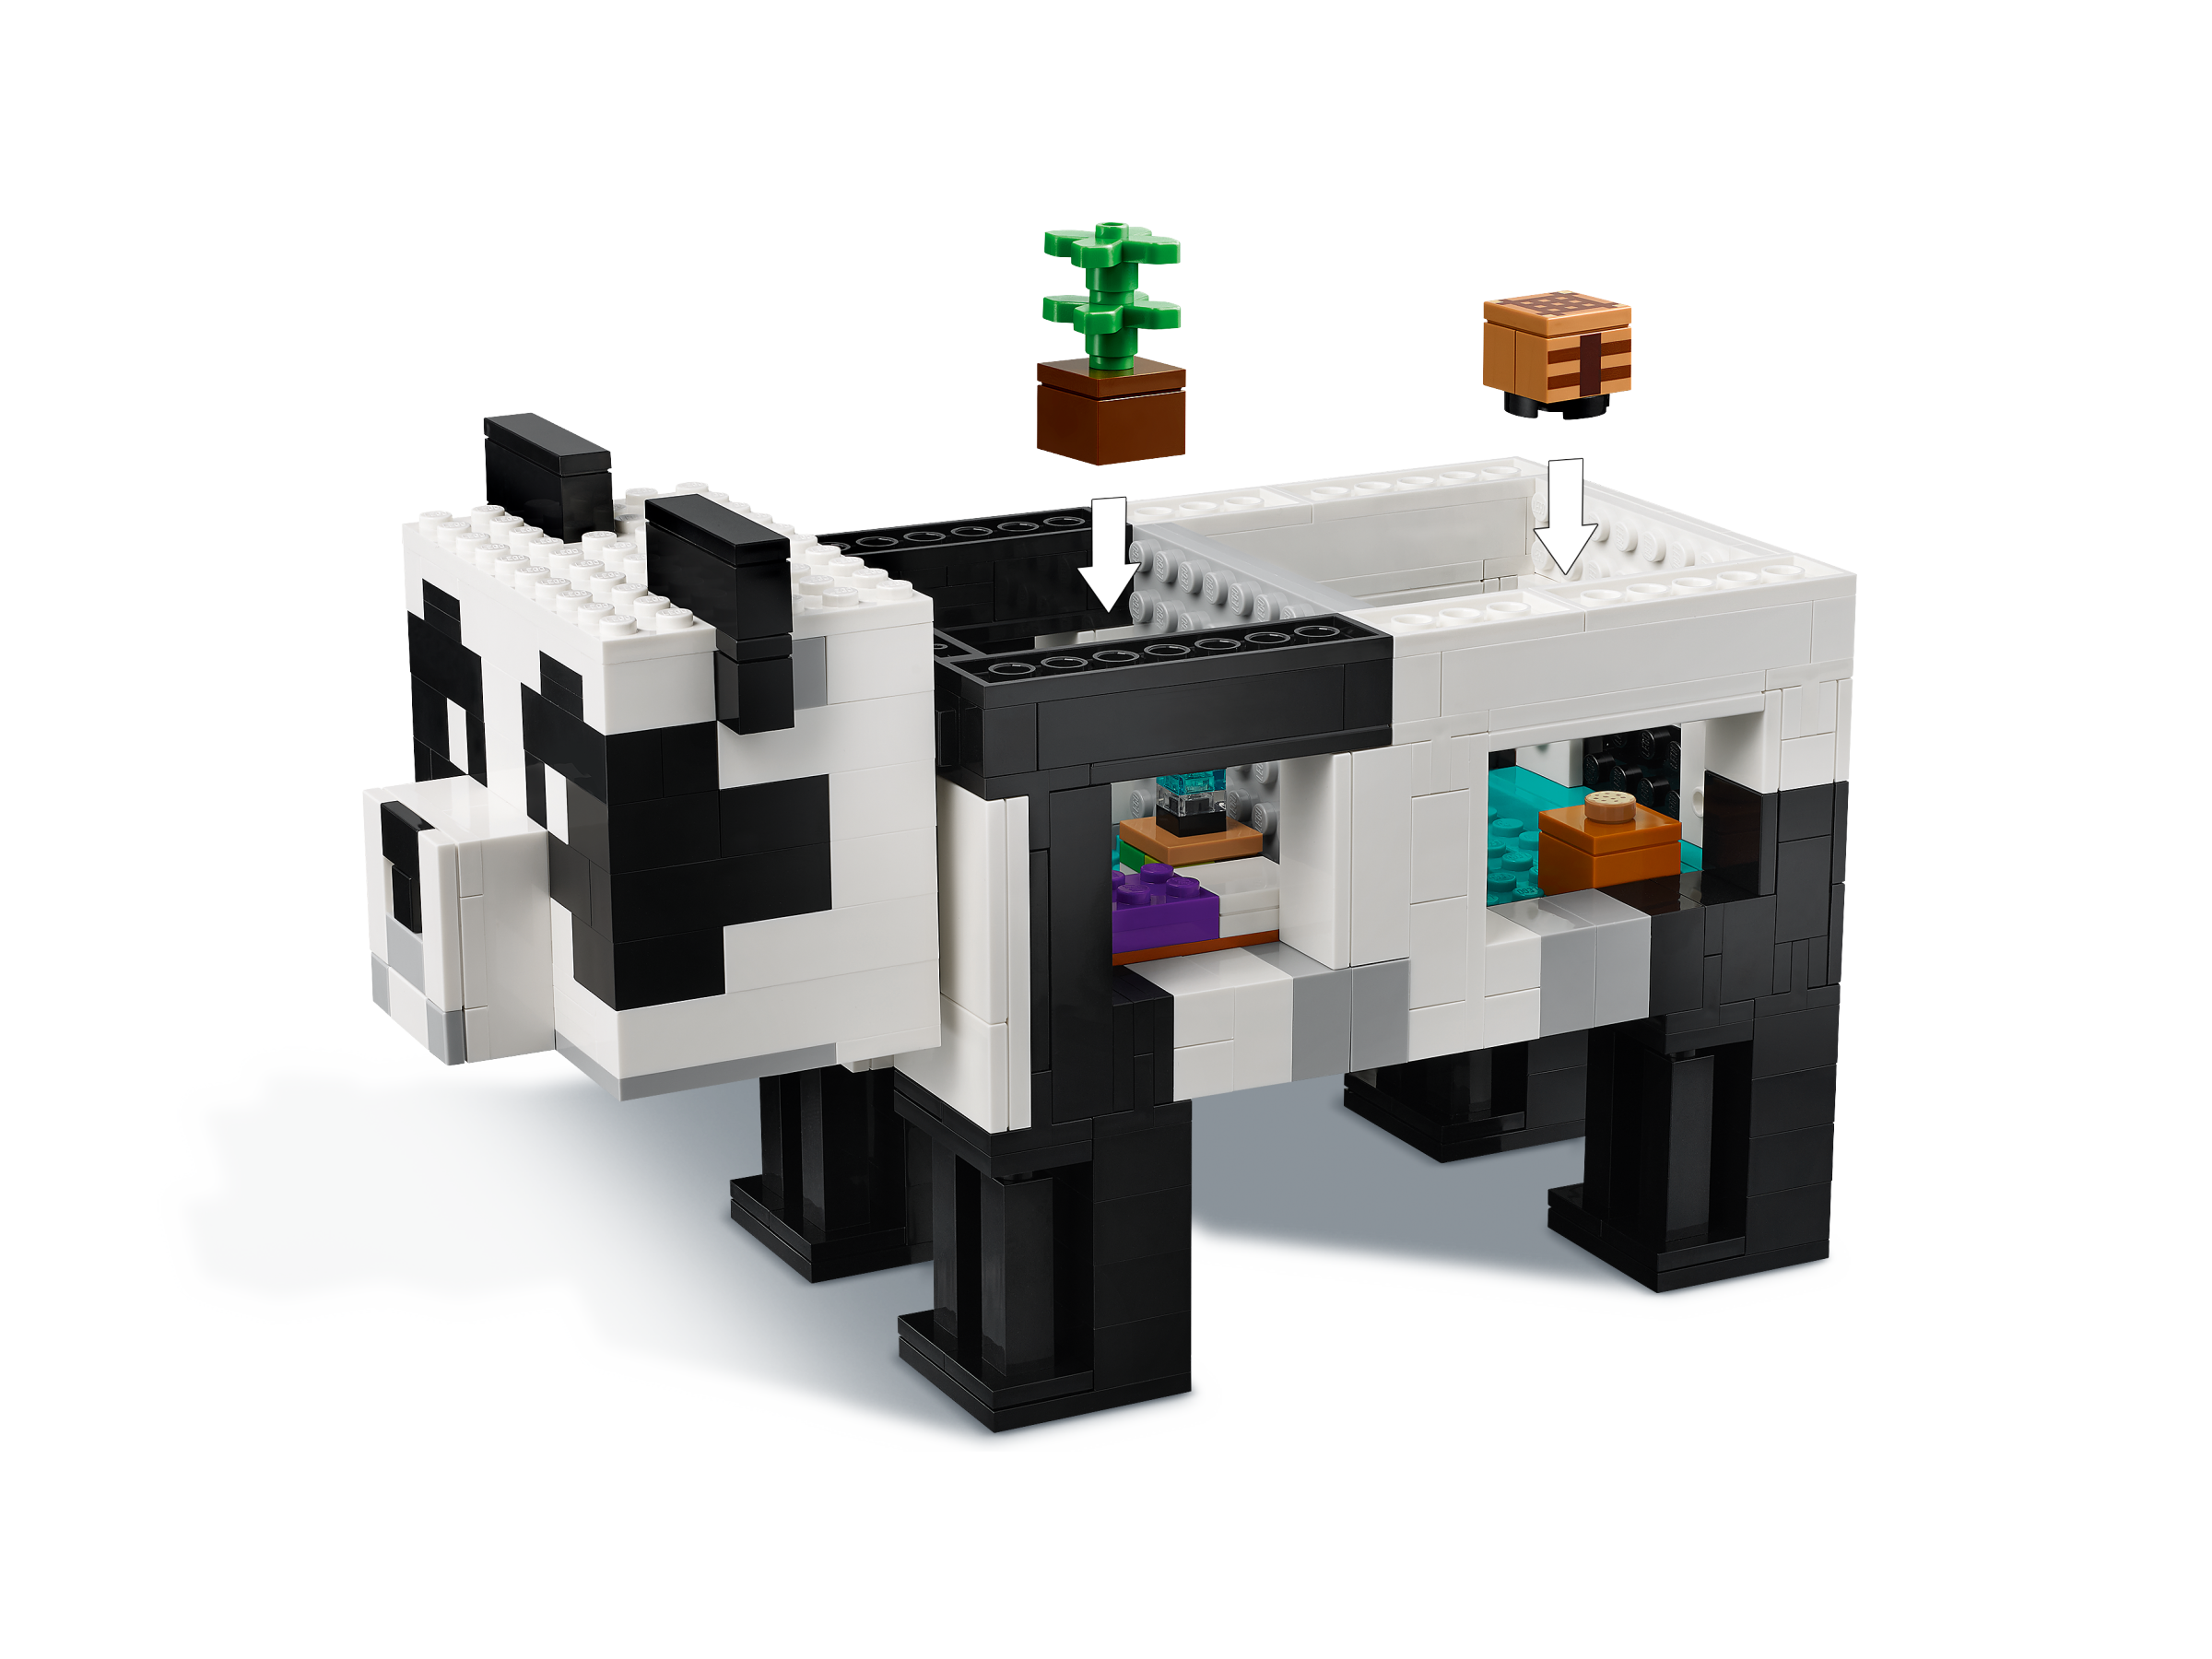 LEGO® Minecraft The Panda Haven 21245